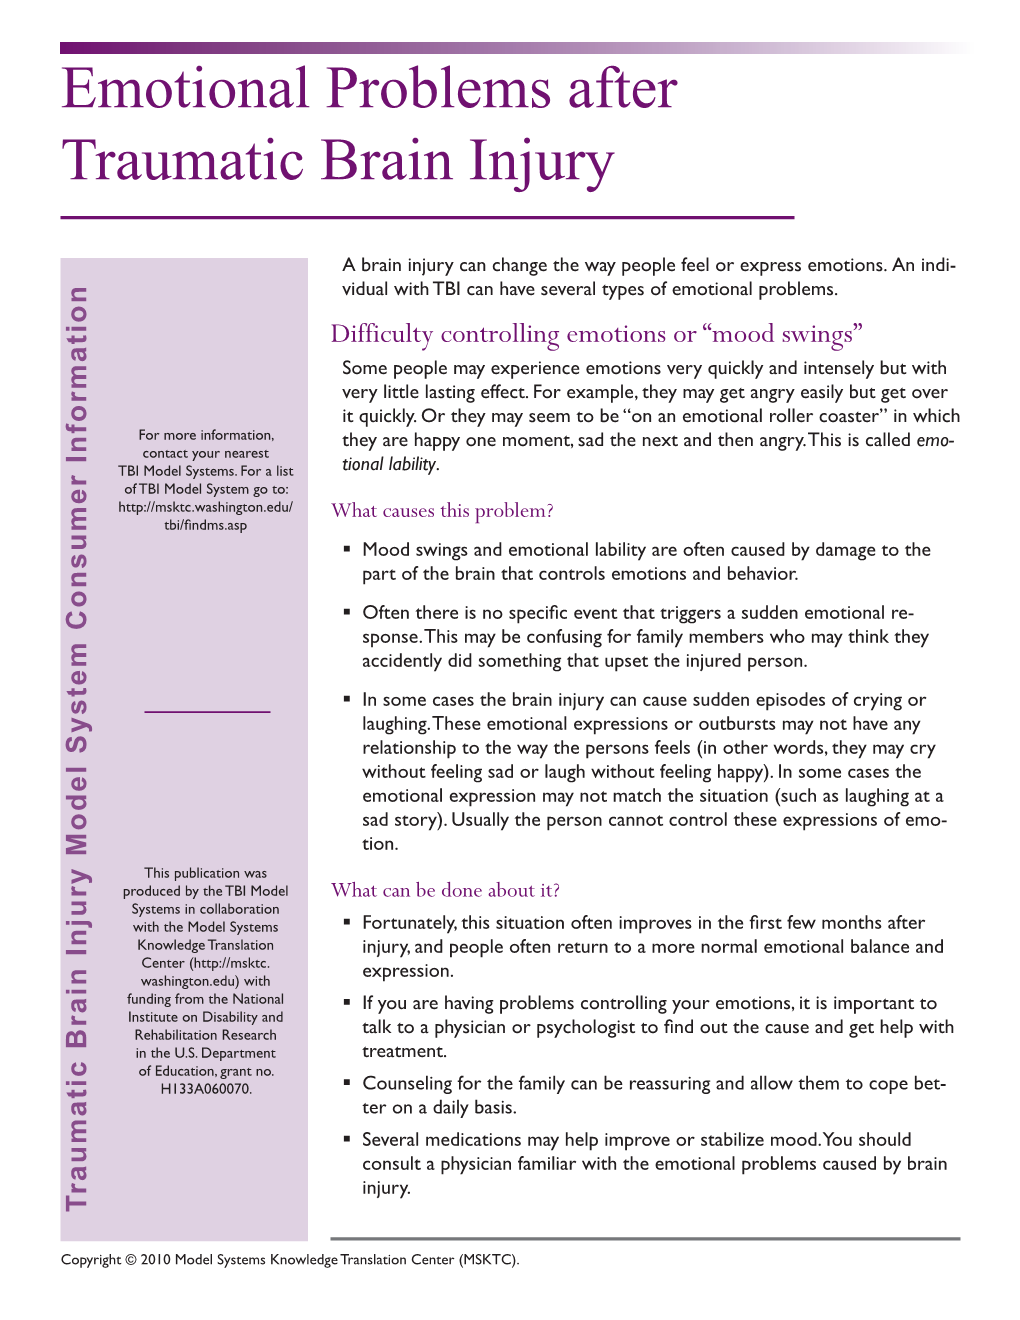 Emotional Problems After Traumatic Brain Injury